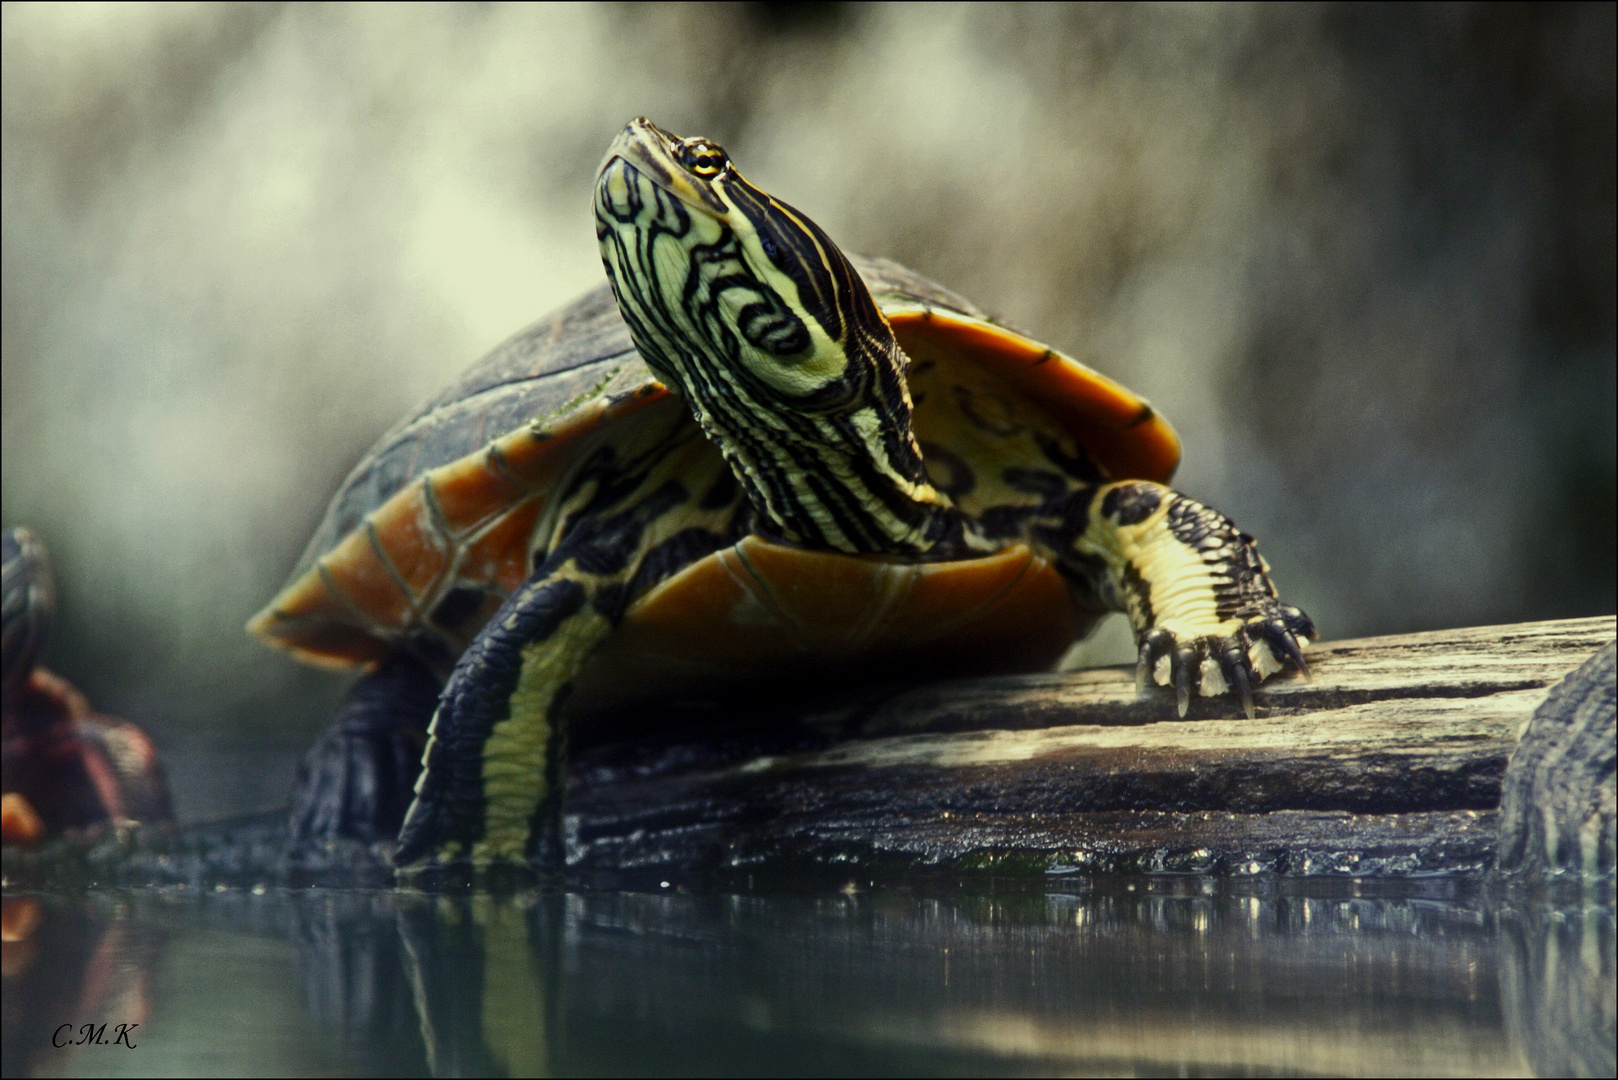 Florida Schmuckschildkröte